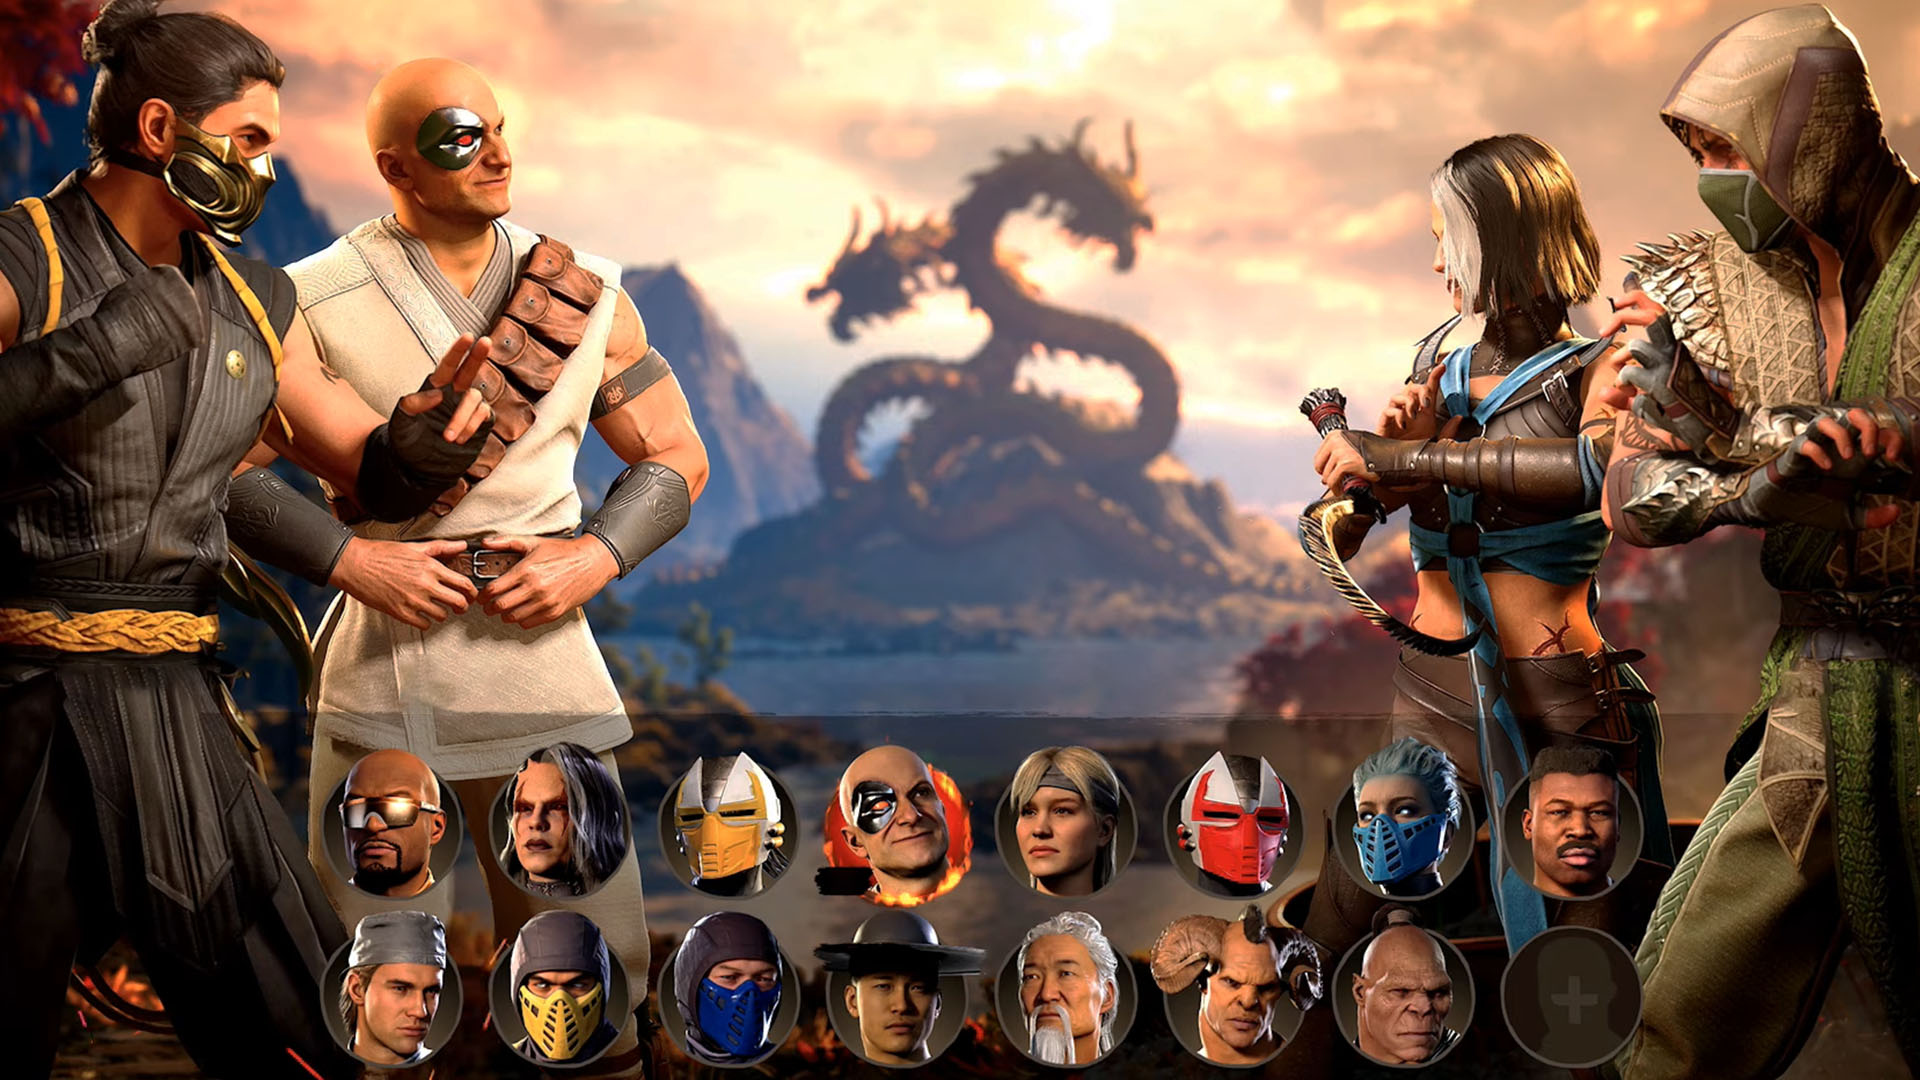 Mortal Kombat 11 has more players than Mortal Kombat 1 on PC now